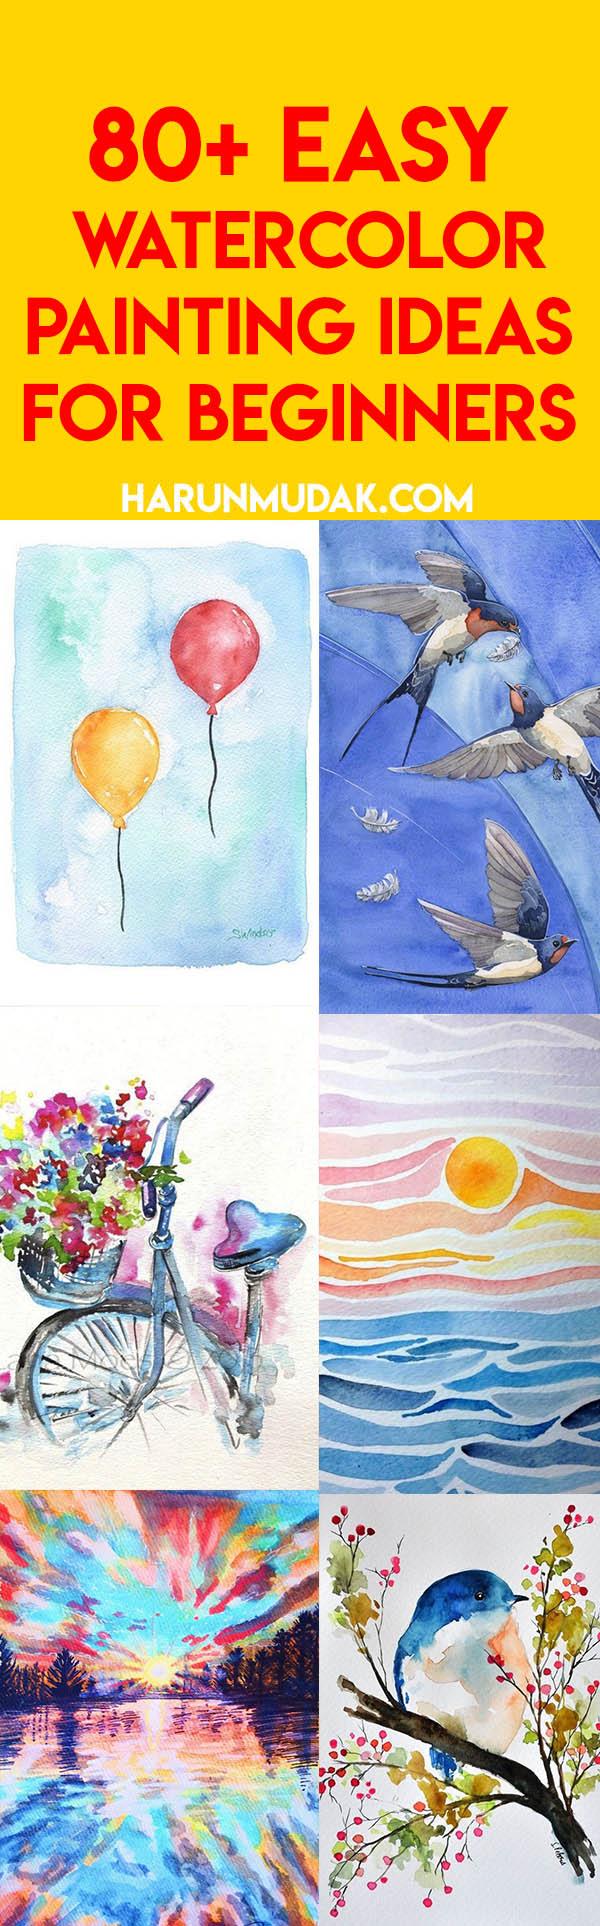 80+ Easy Watercolor Painting Ideas for Beginners - HARUNMUDAK